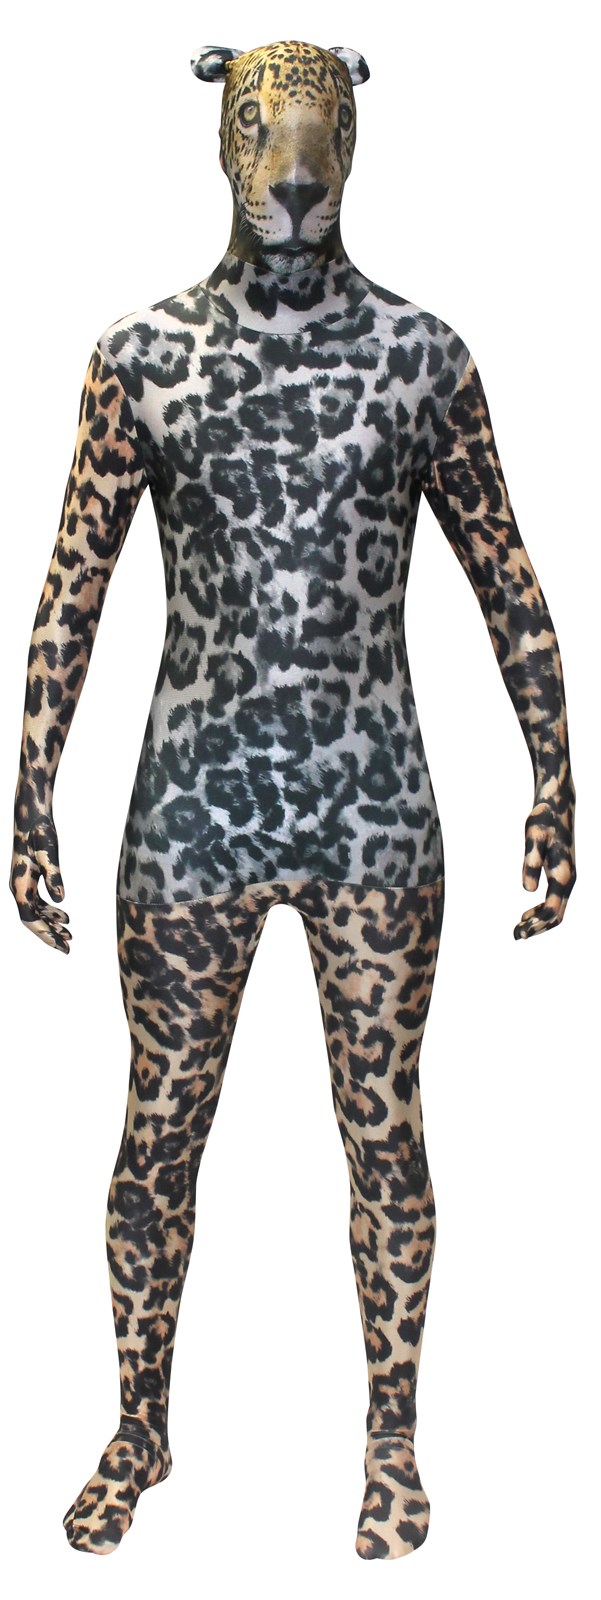 Animal Planet – Jaguar Morphsuit